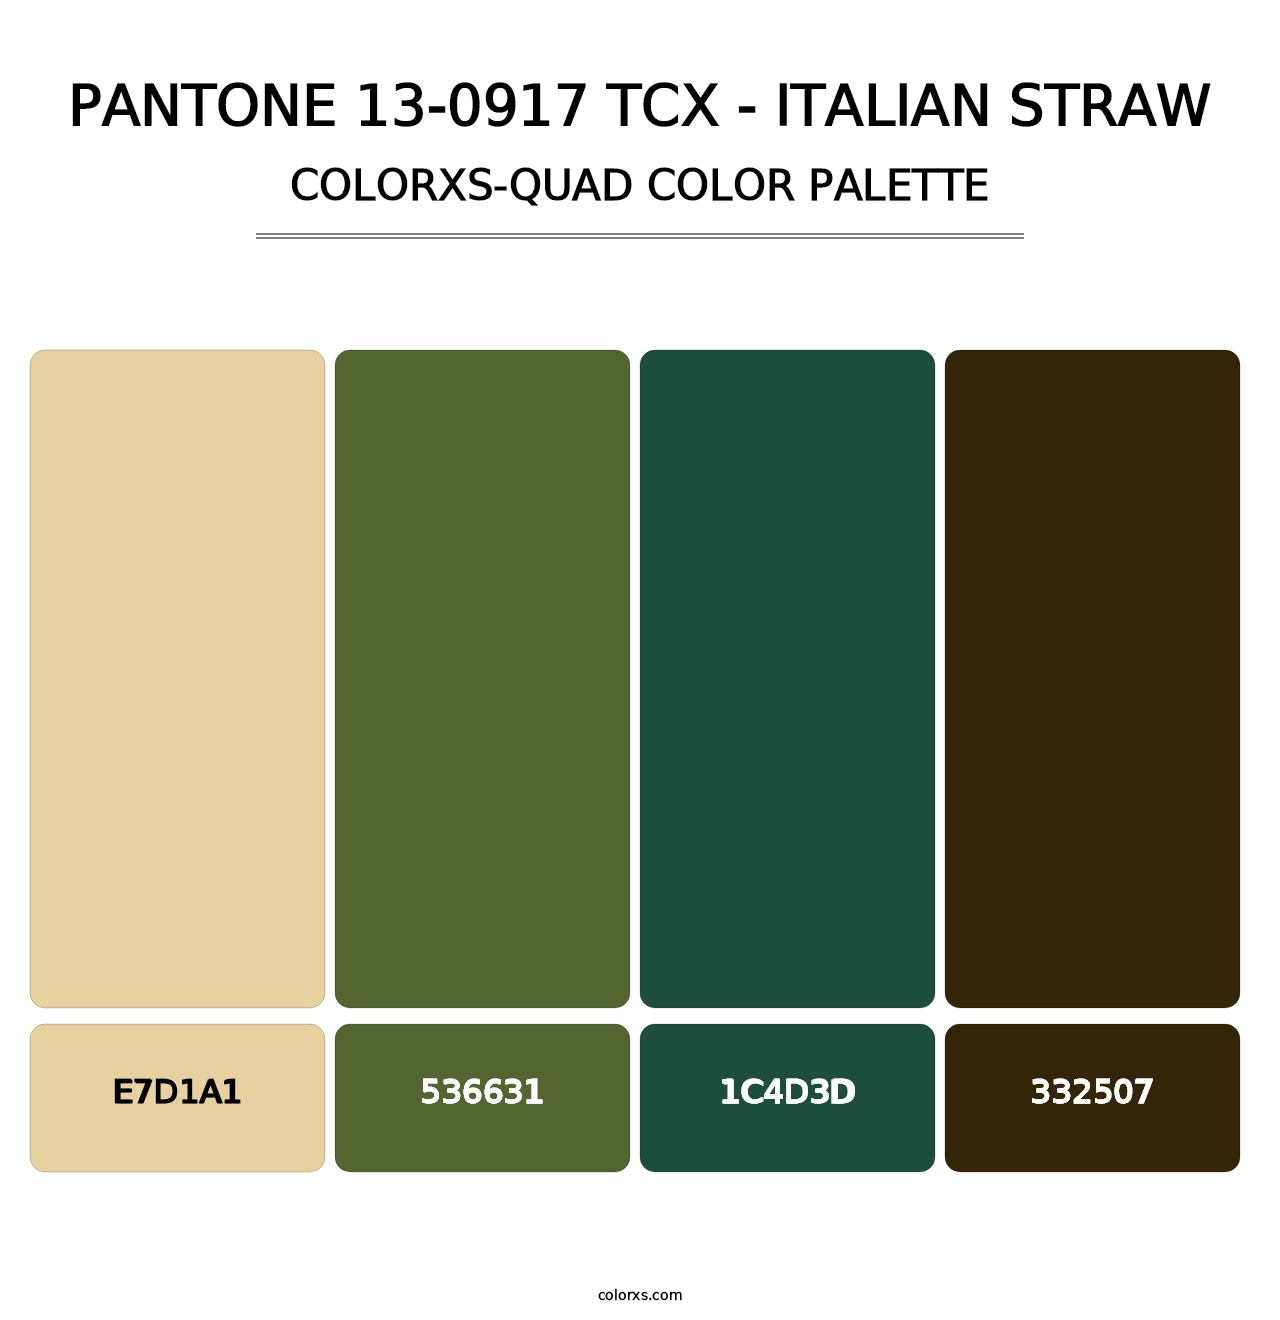 PANTONE 13-0917 TCX - Italian Straw - Colorxs Quad Palette